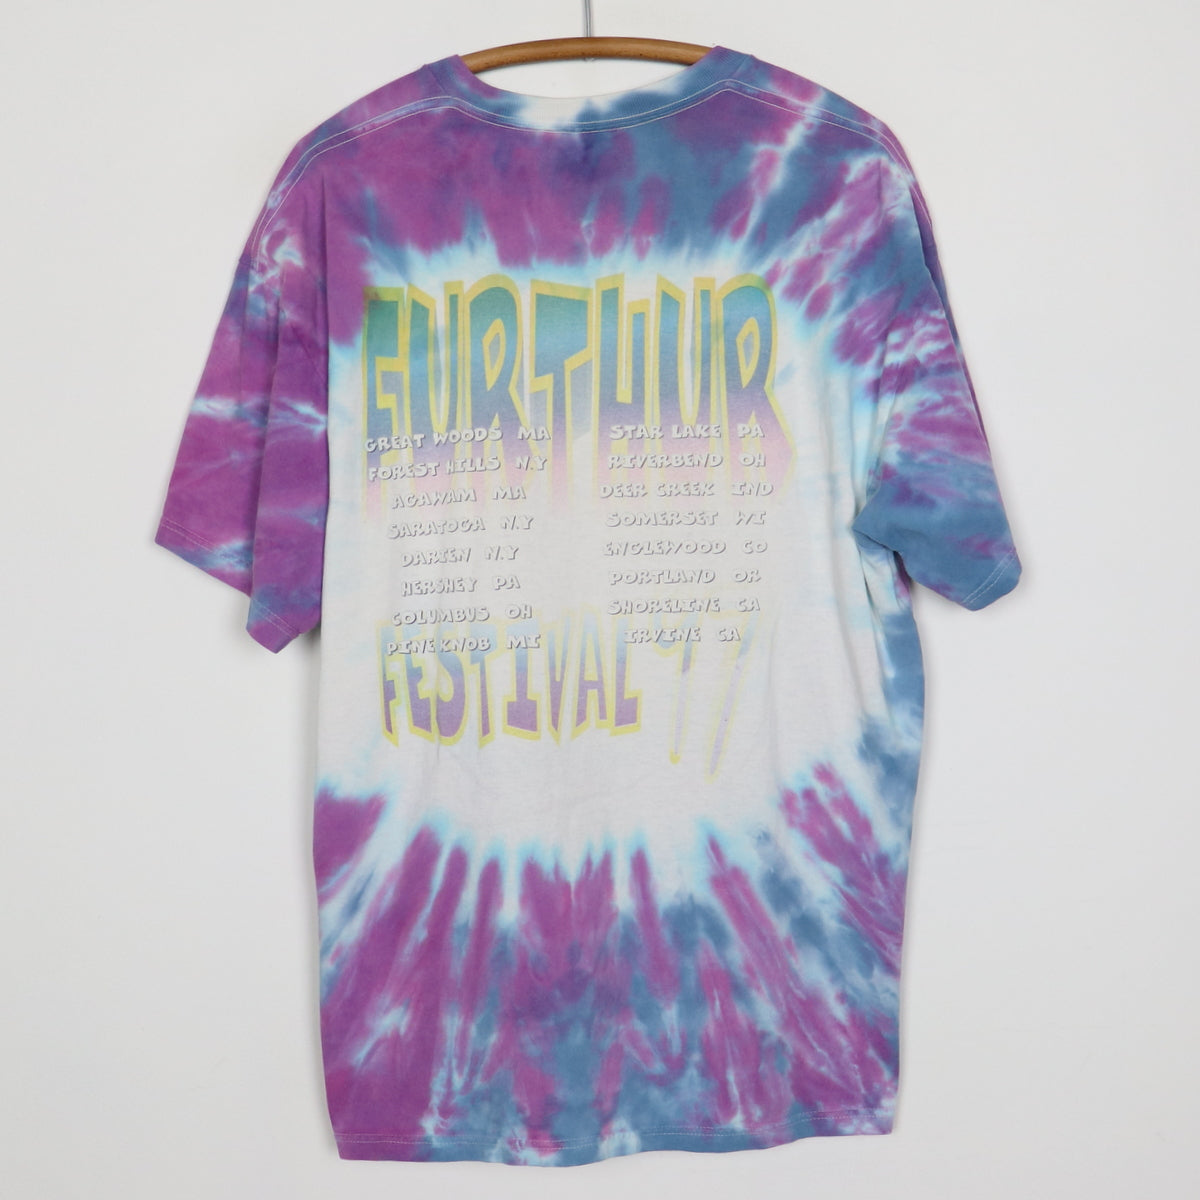 1997 Further Festival Jerry WyCo Tour – Garcia Shirt Vintage Dye Tie